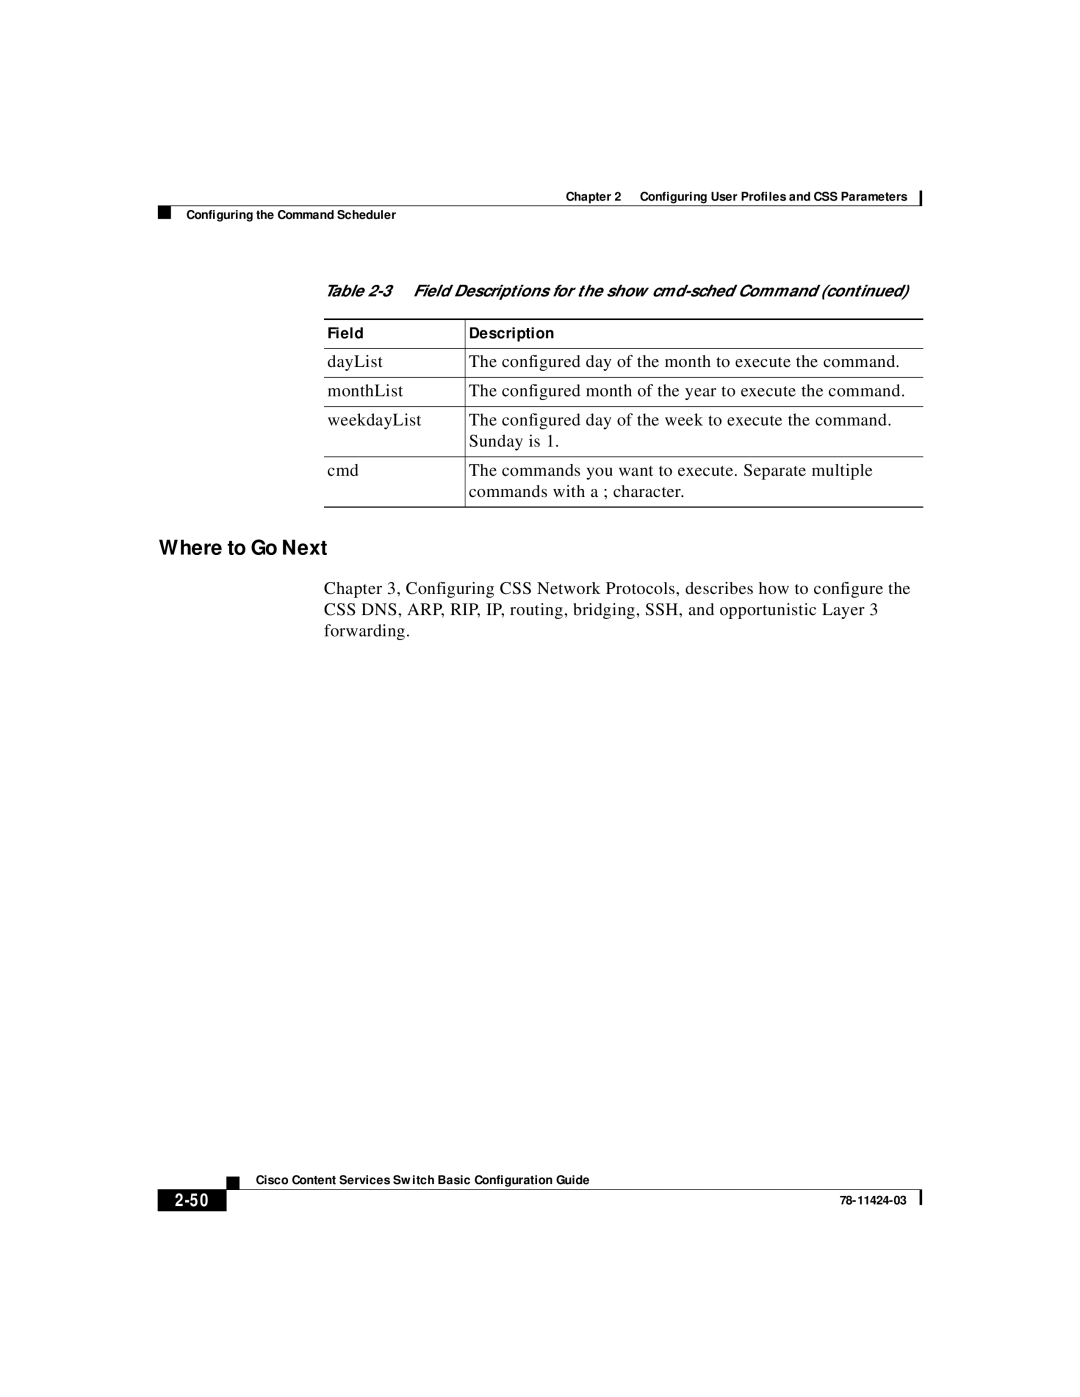 Cisco Systems 78-11424-03 manual Where to Go Next, 2-50, Field, Description 